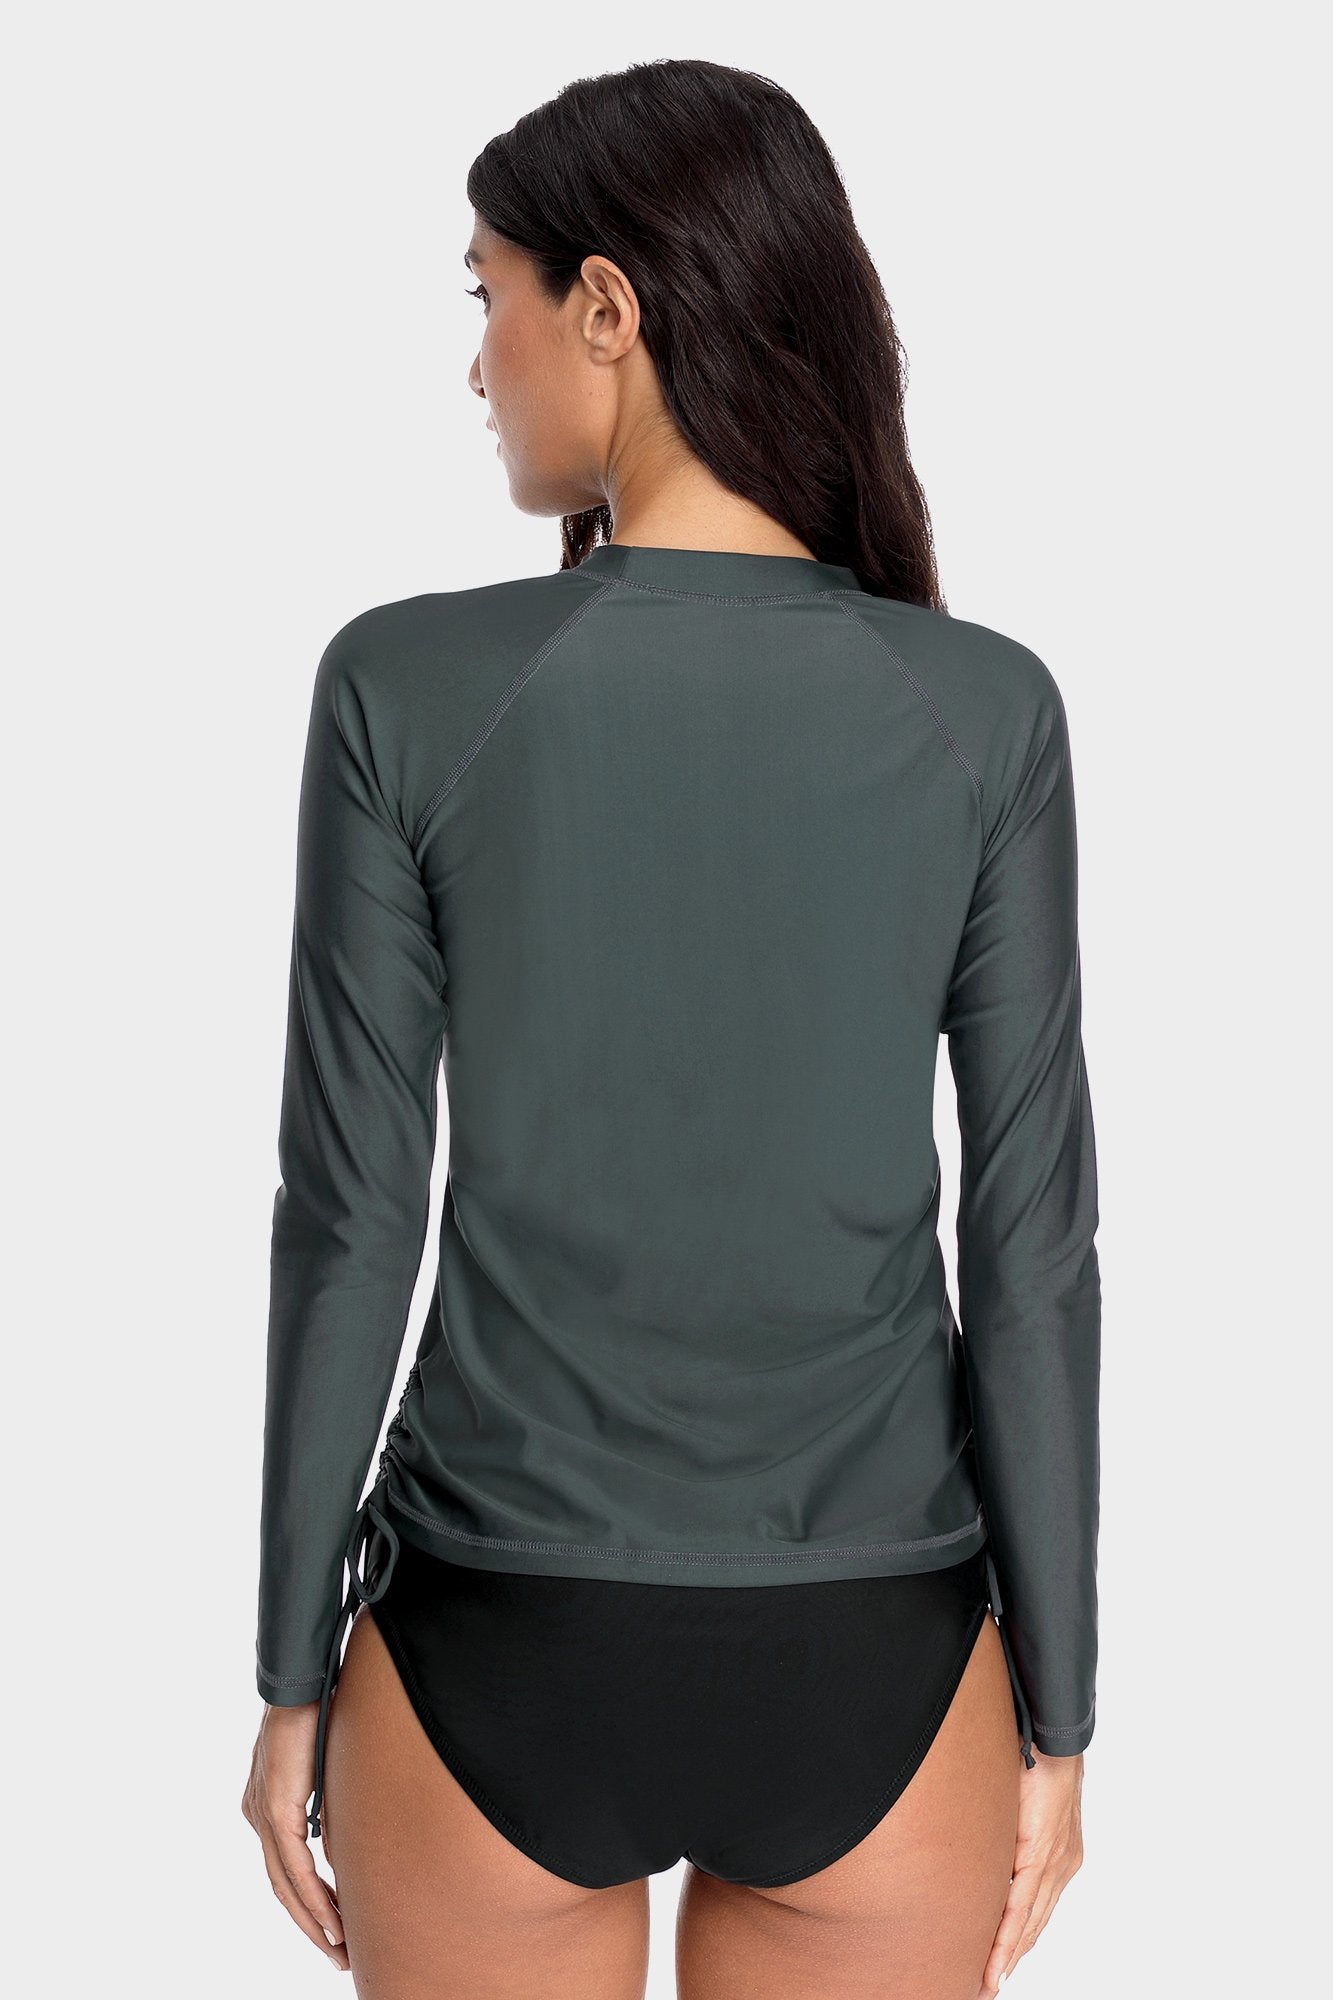 Women's Solid Grey Side Drawstring Long Sleeve UPF 50+ Rashguard-Attraco | Fashion Outdoor Clothing